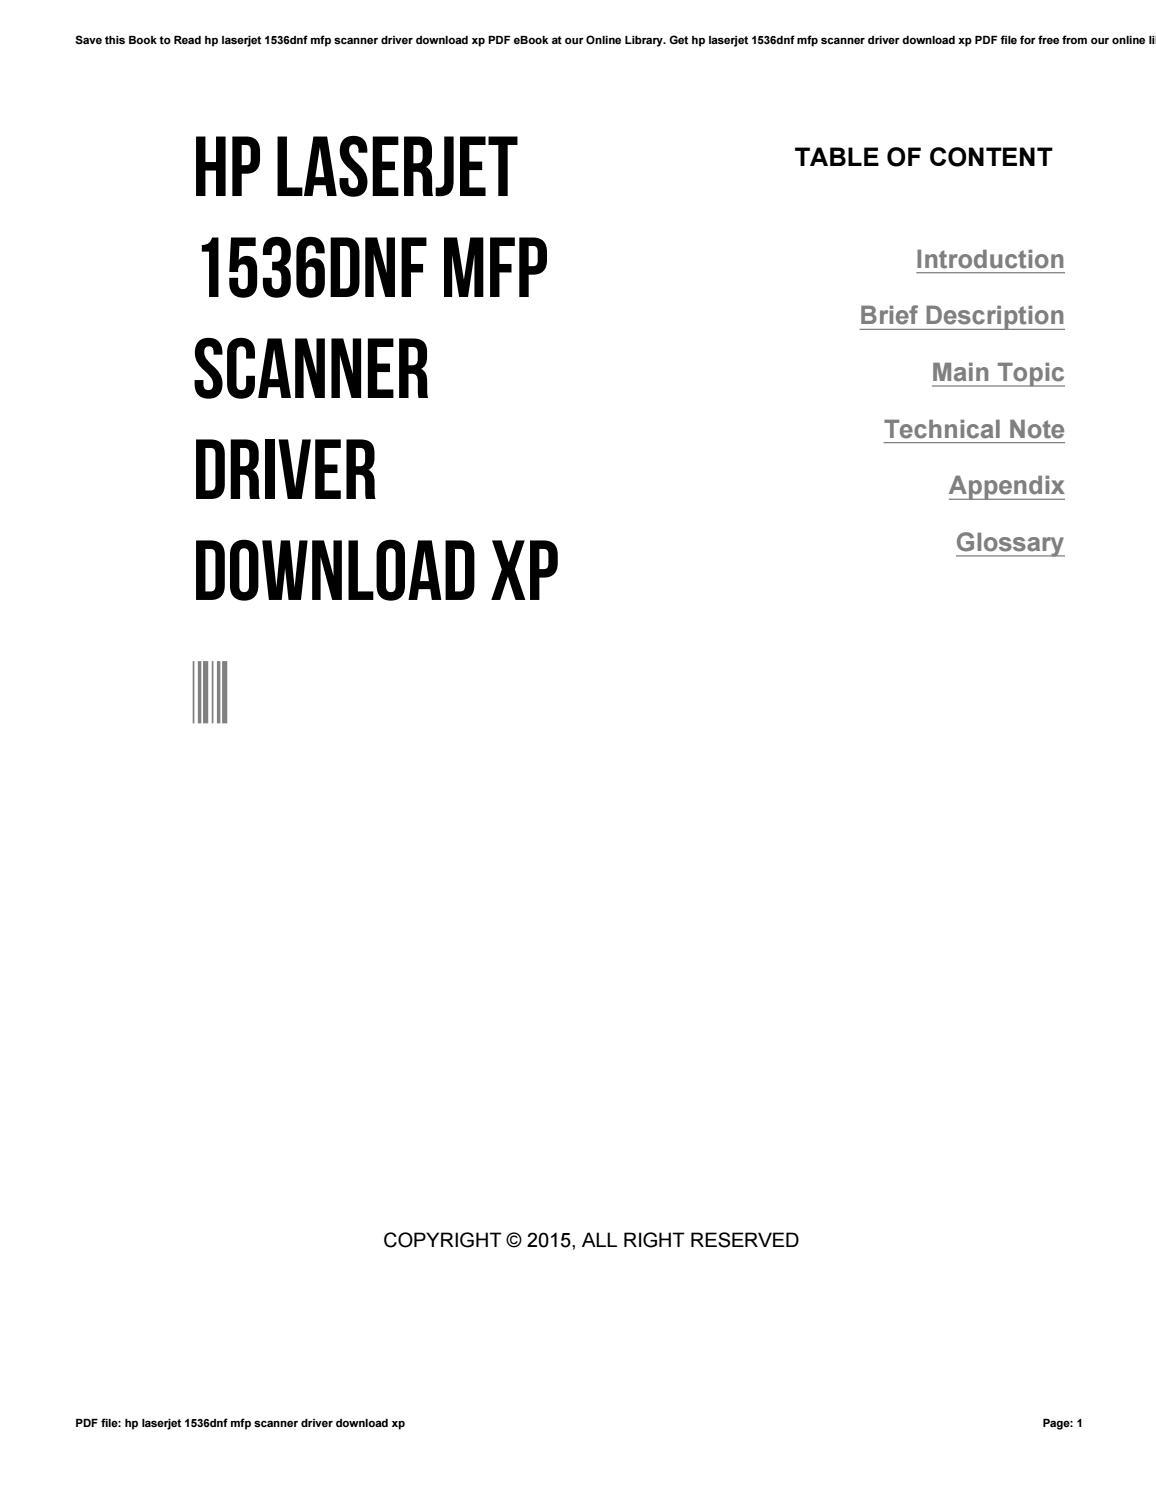 Hp laserjet 1536dnf mfp driver download for windows 8.1